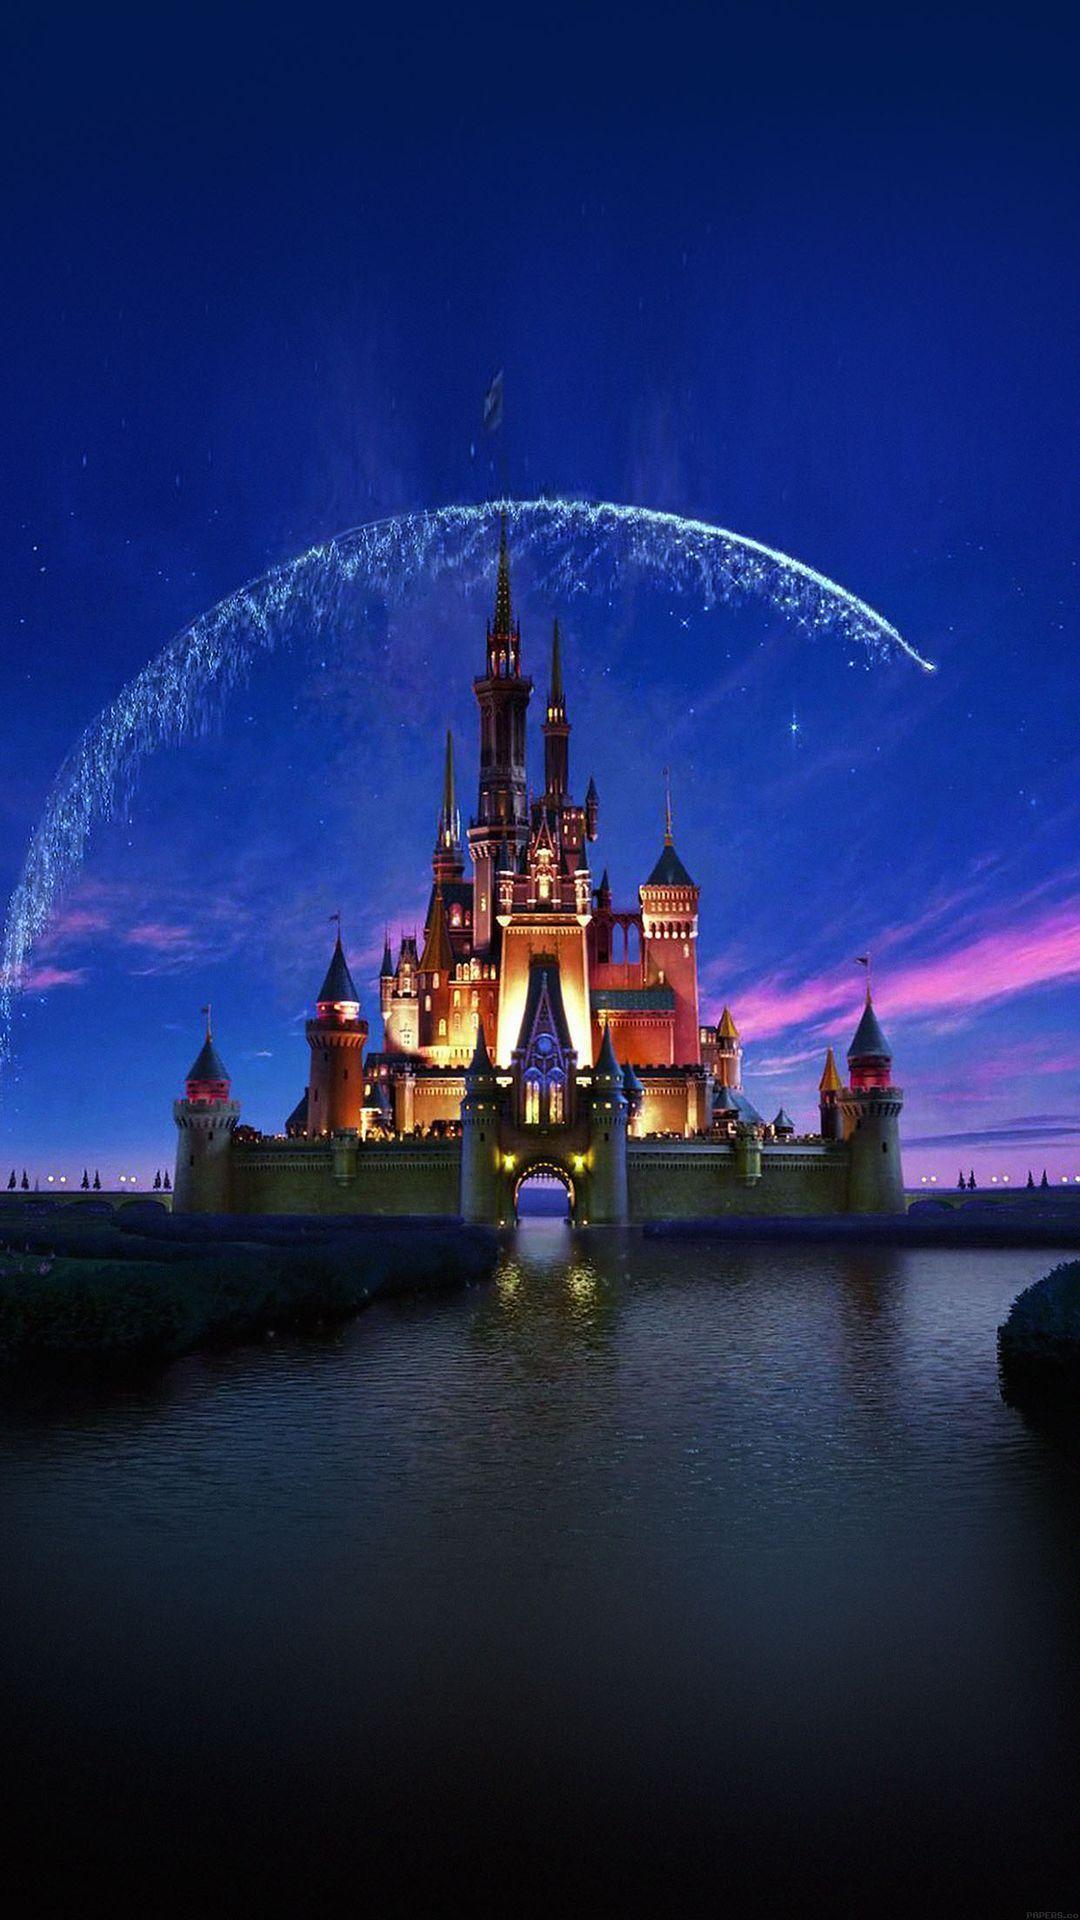 Tap image for more iPhone Disney wallpaper! Disney castle